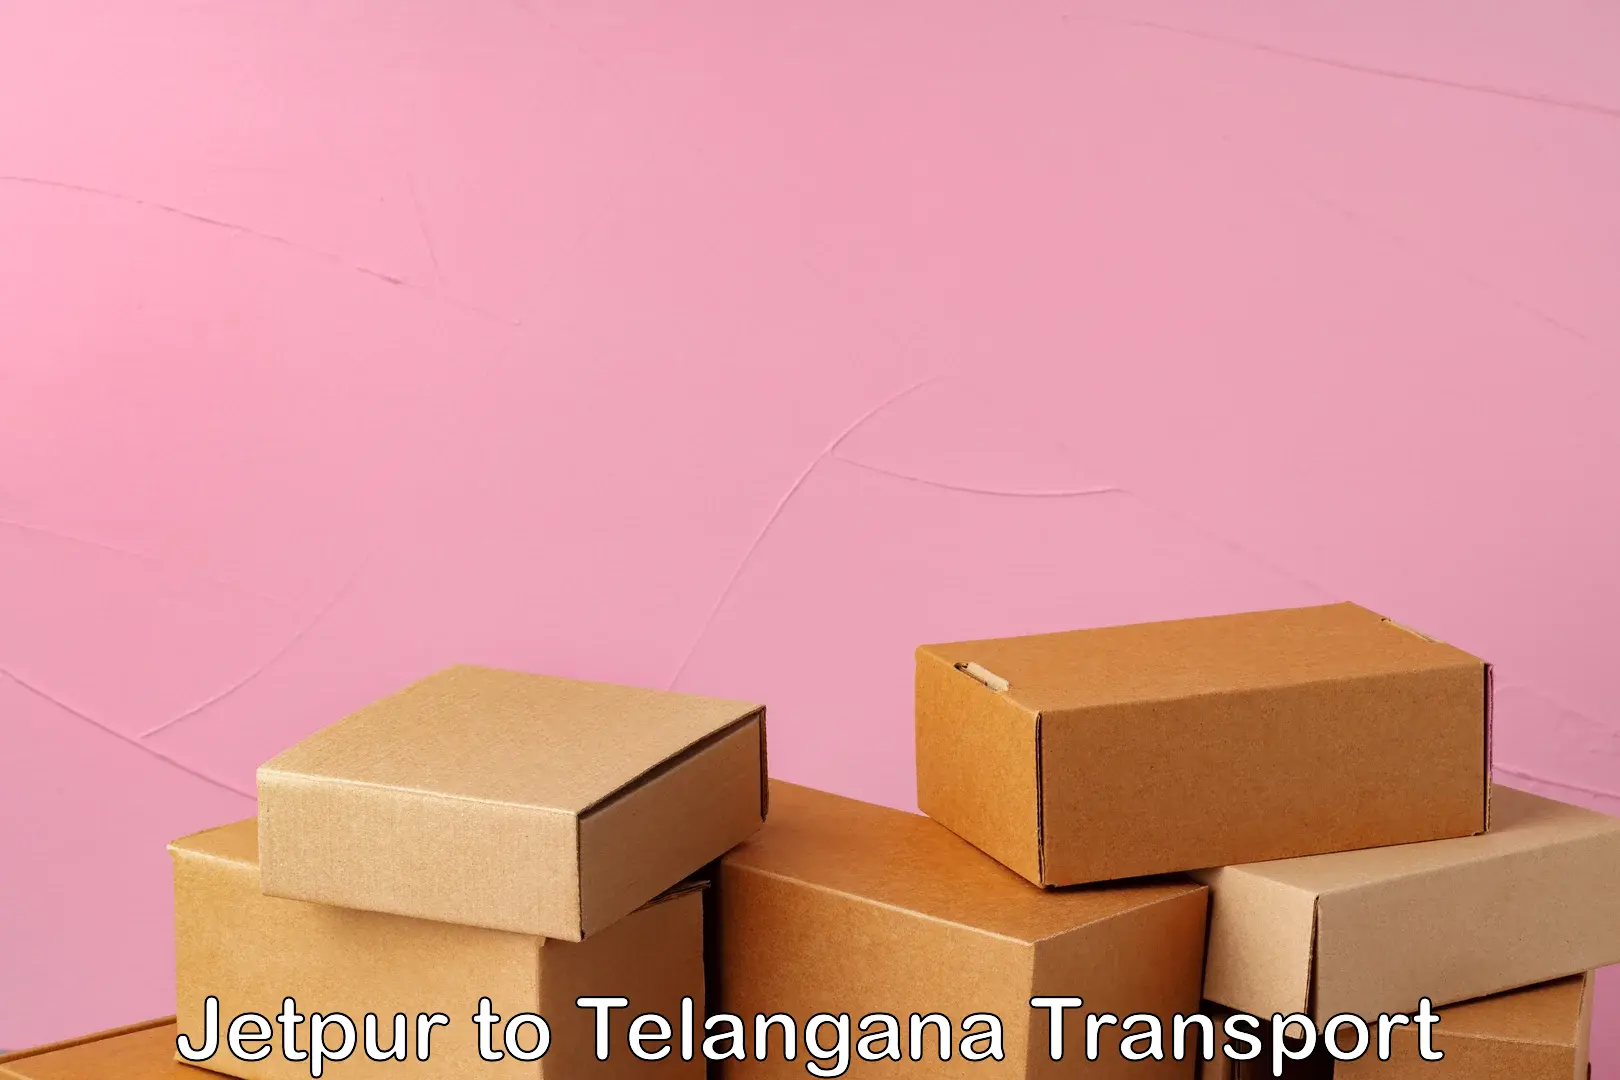 Intercity transport in Jetpur to Telangana